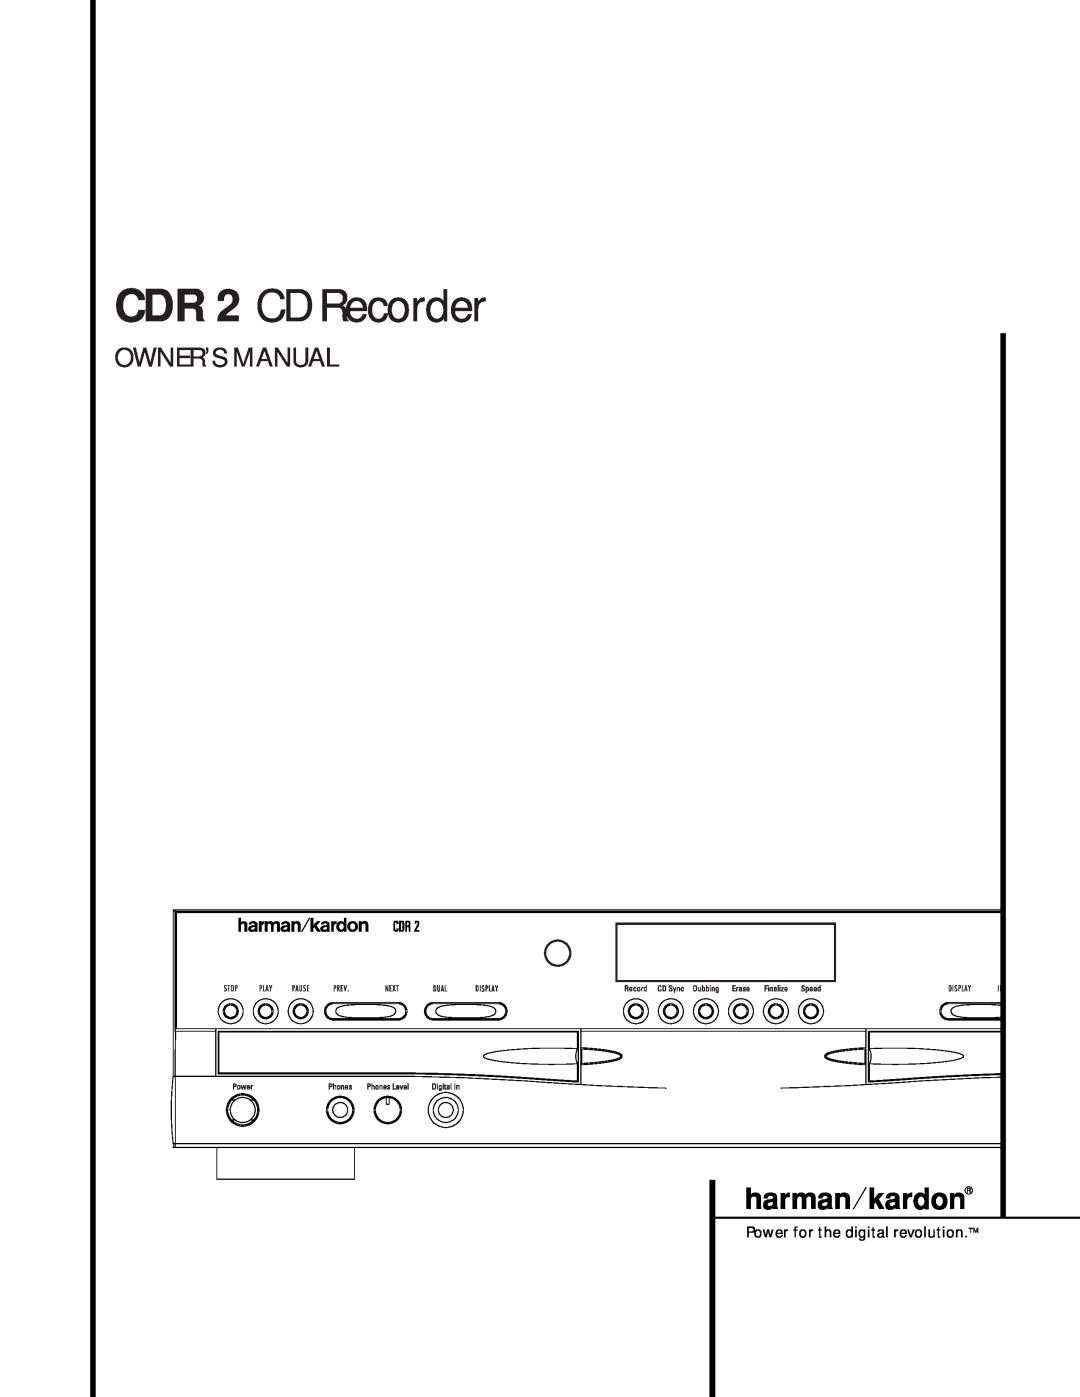 Harman-Kardon owner manual CDR 2 CD Recorder 